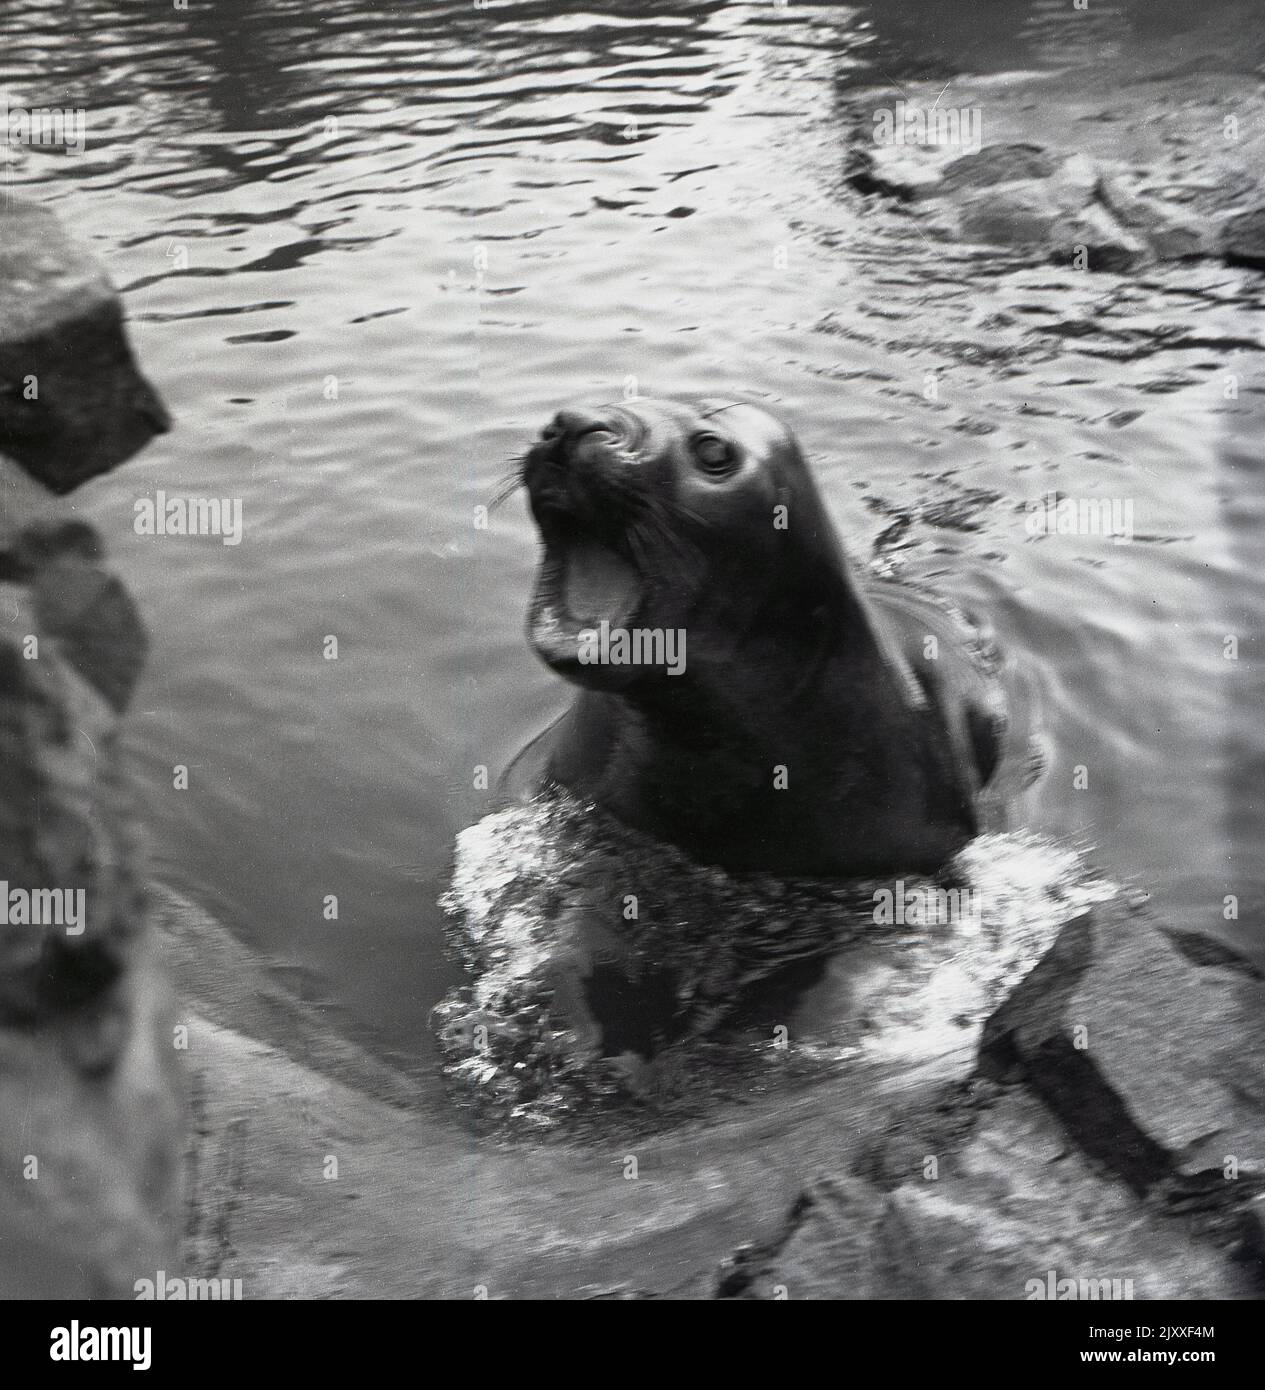 1965, historical, sea lion in water, by rocks, mouth open, Edinburgh Zoo, Scotland, UK. Stock Photo